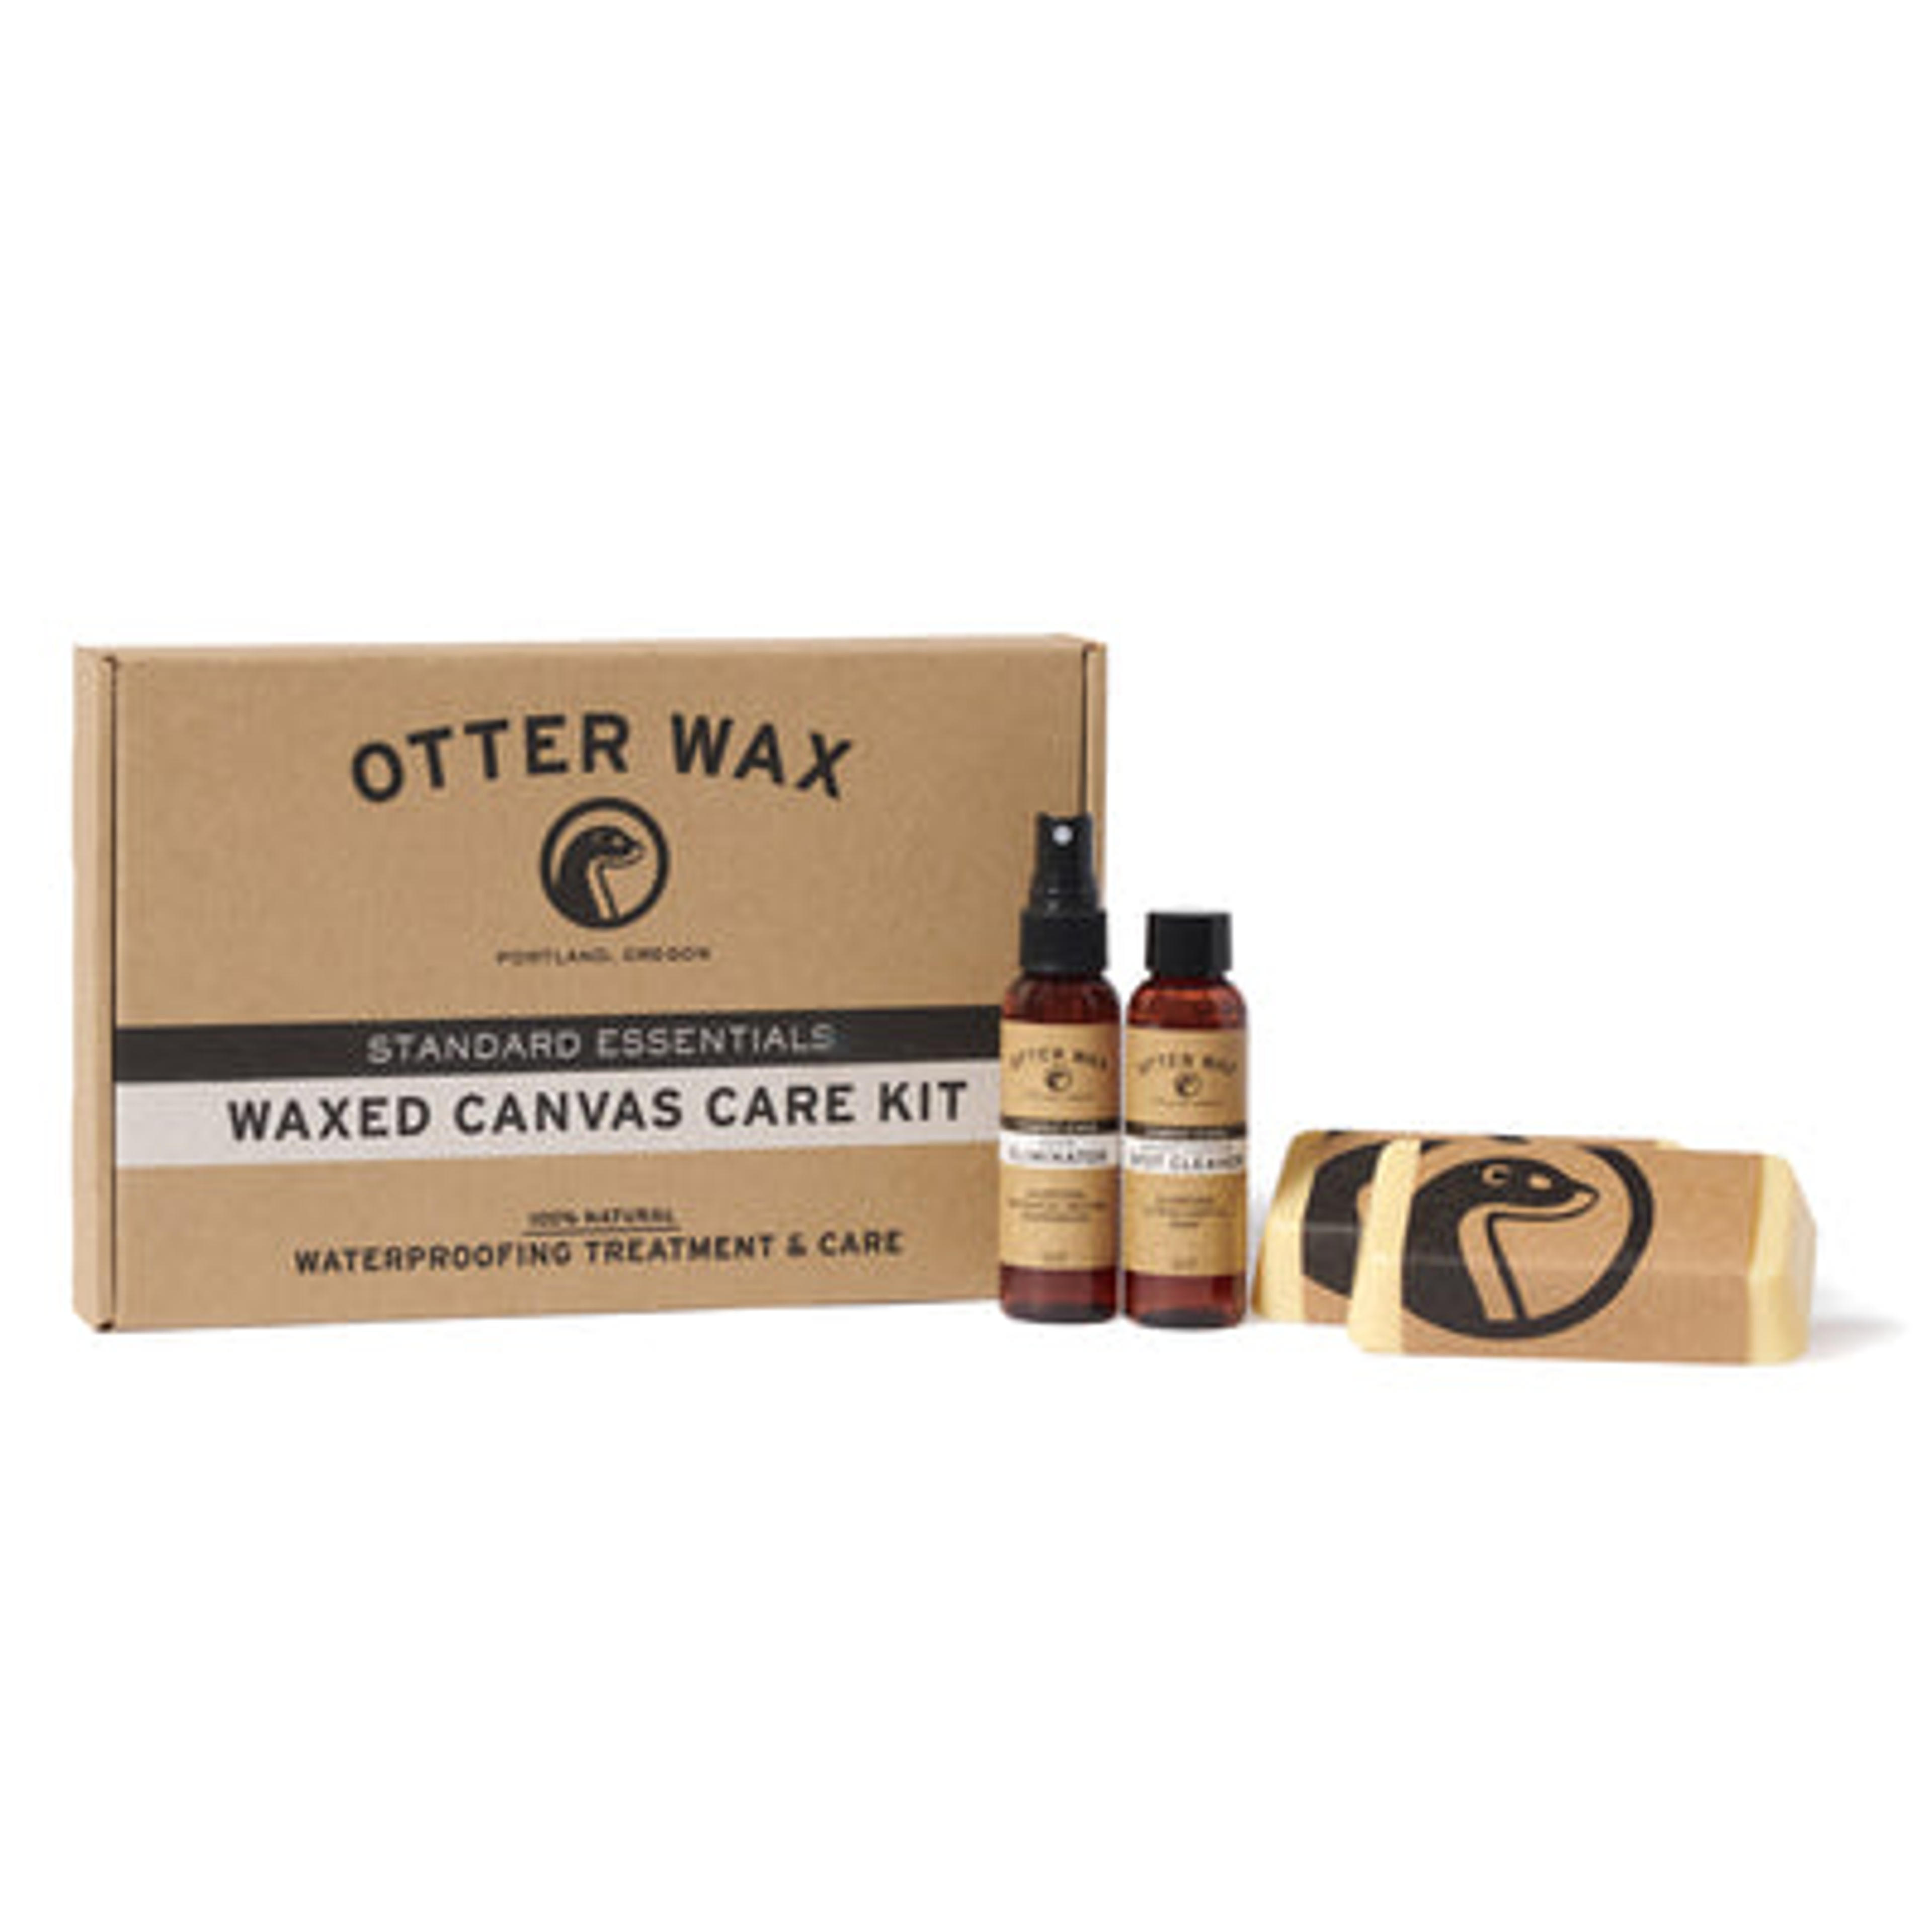 Otter Wax Waxed Canvas Care Kit | Premium Standard Essentials